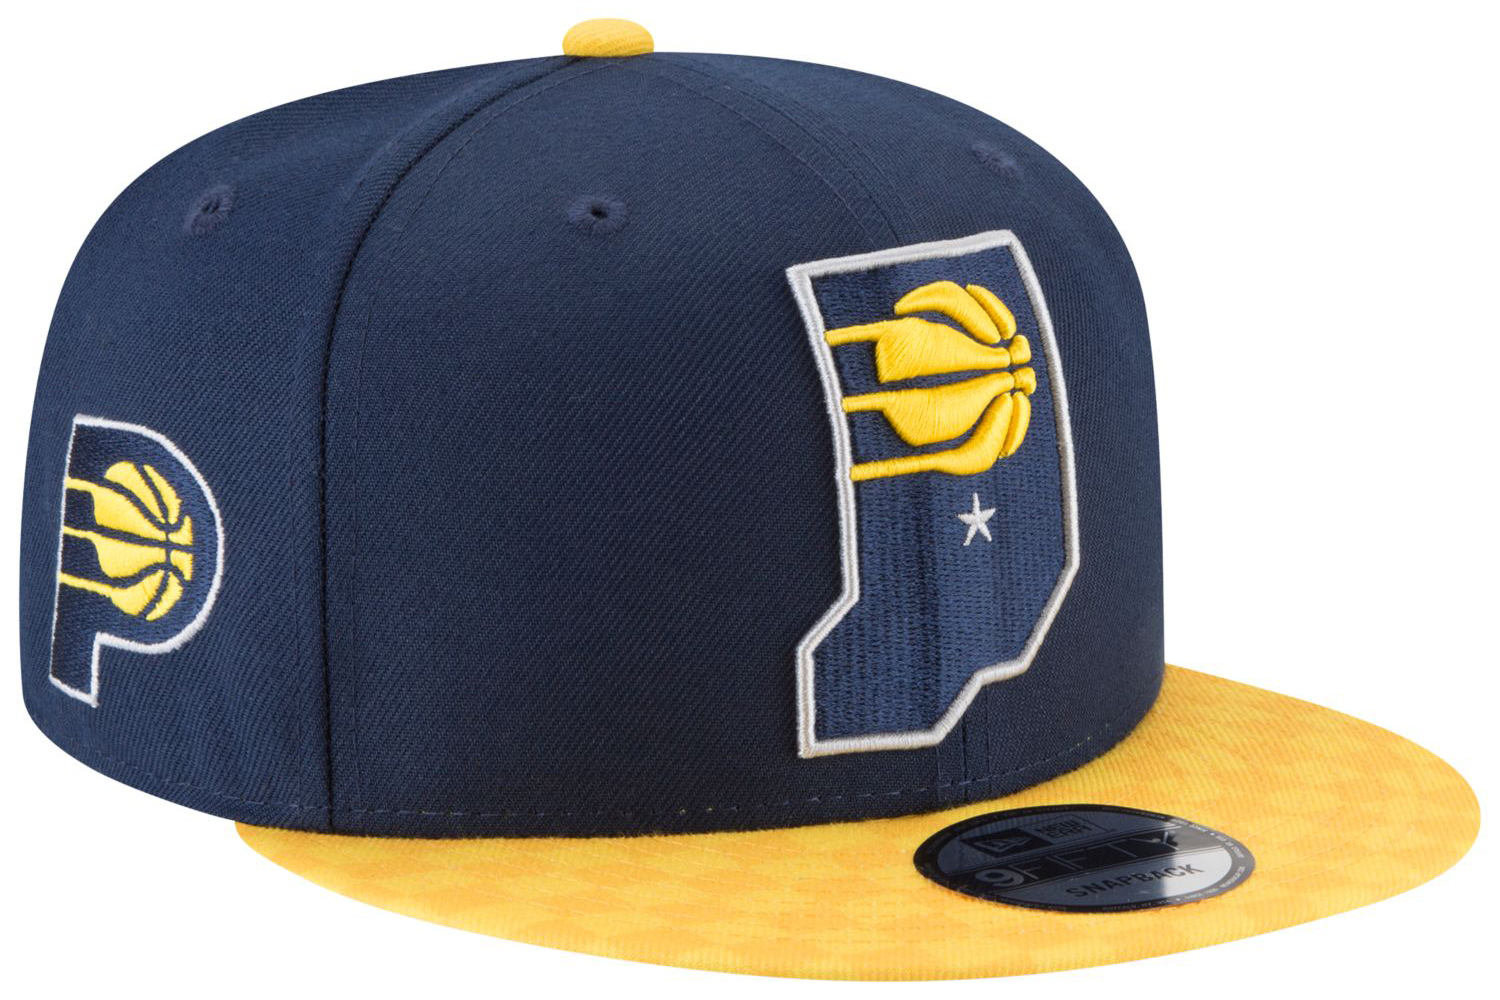 New Era Hats Reveal More NBA City Edition Uniform Details SportsLogos